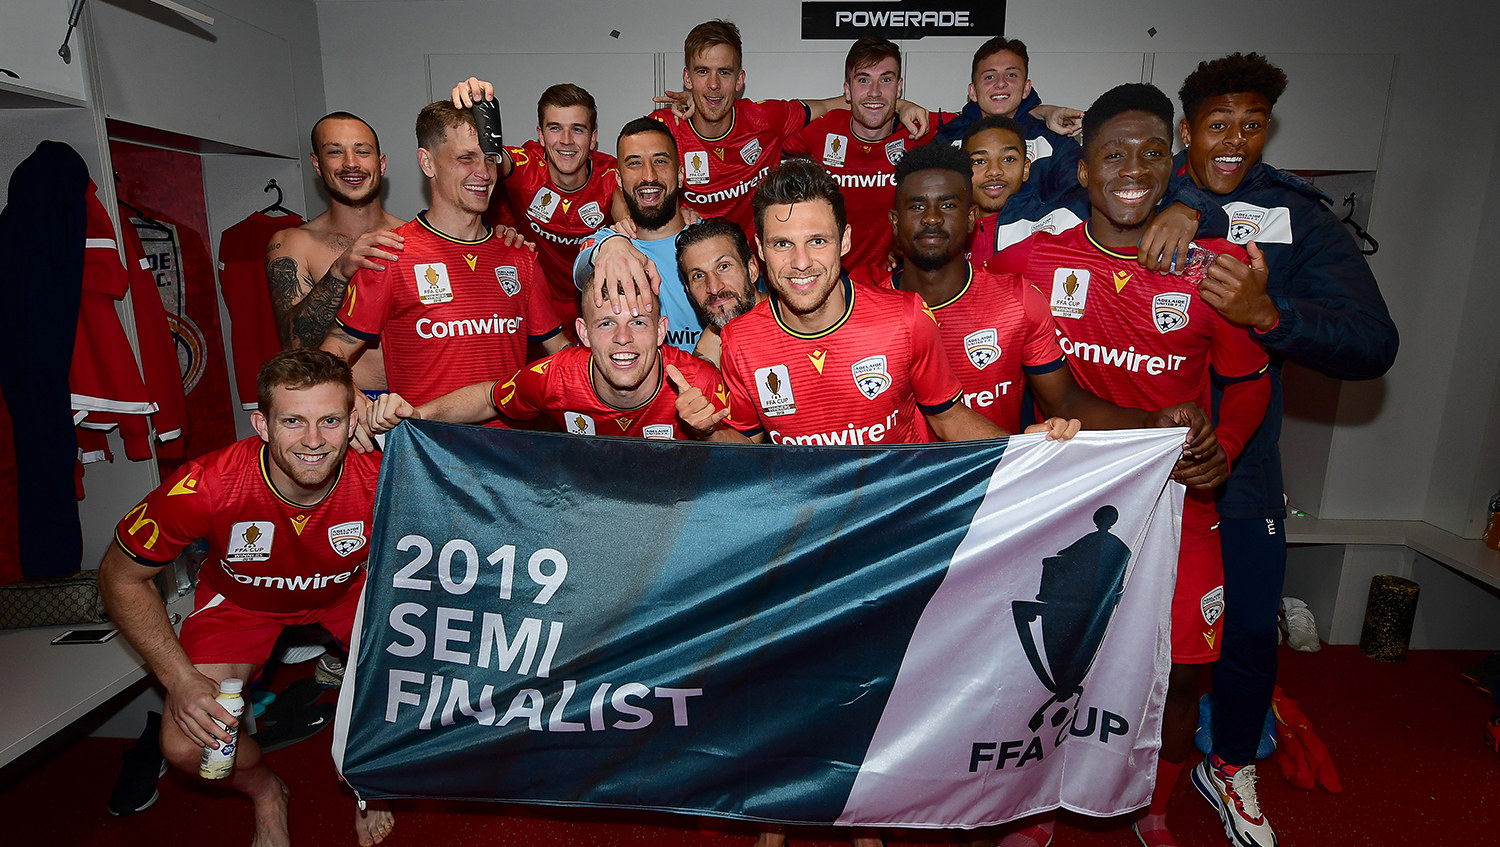 FFA Cup 2019 semi finalist